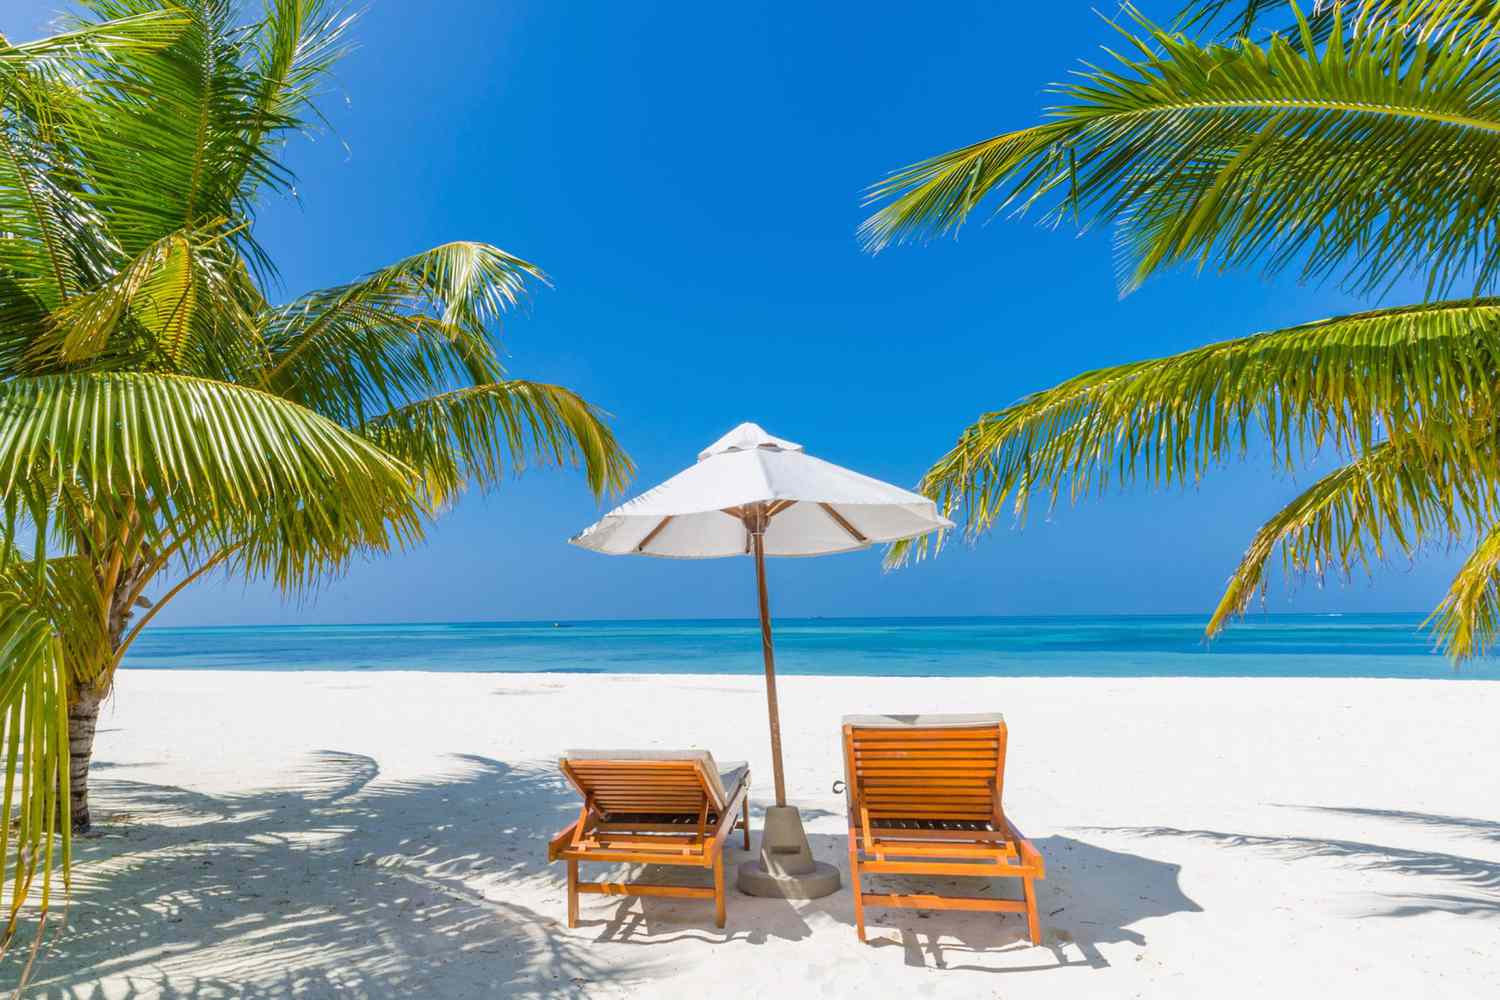 Fantastic beach landscape. Maldives beach scene with blue sky, white sand and palm trees